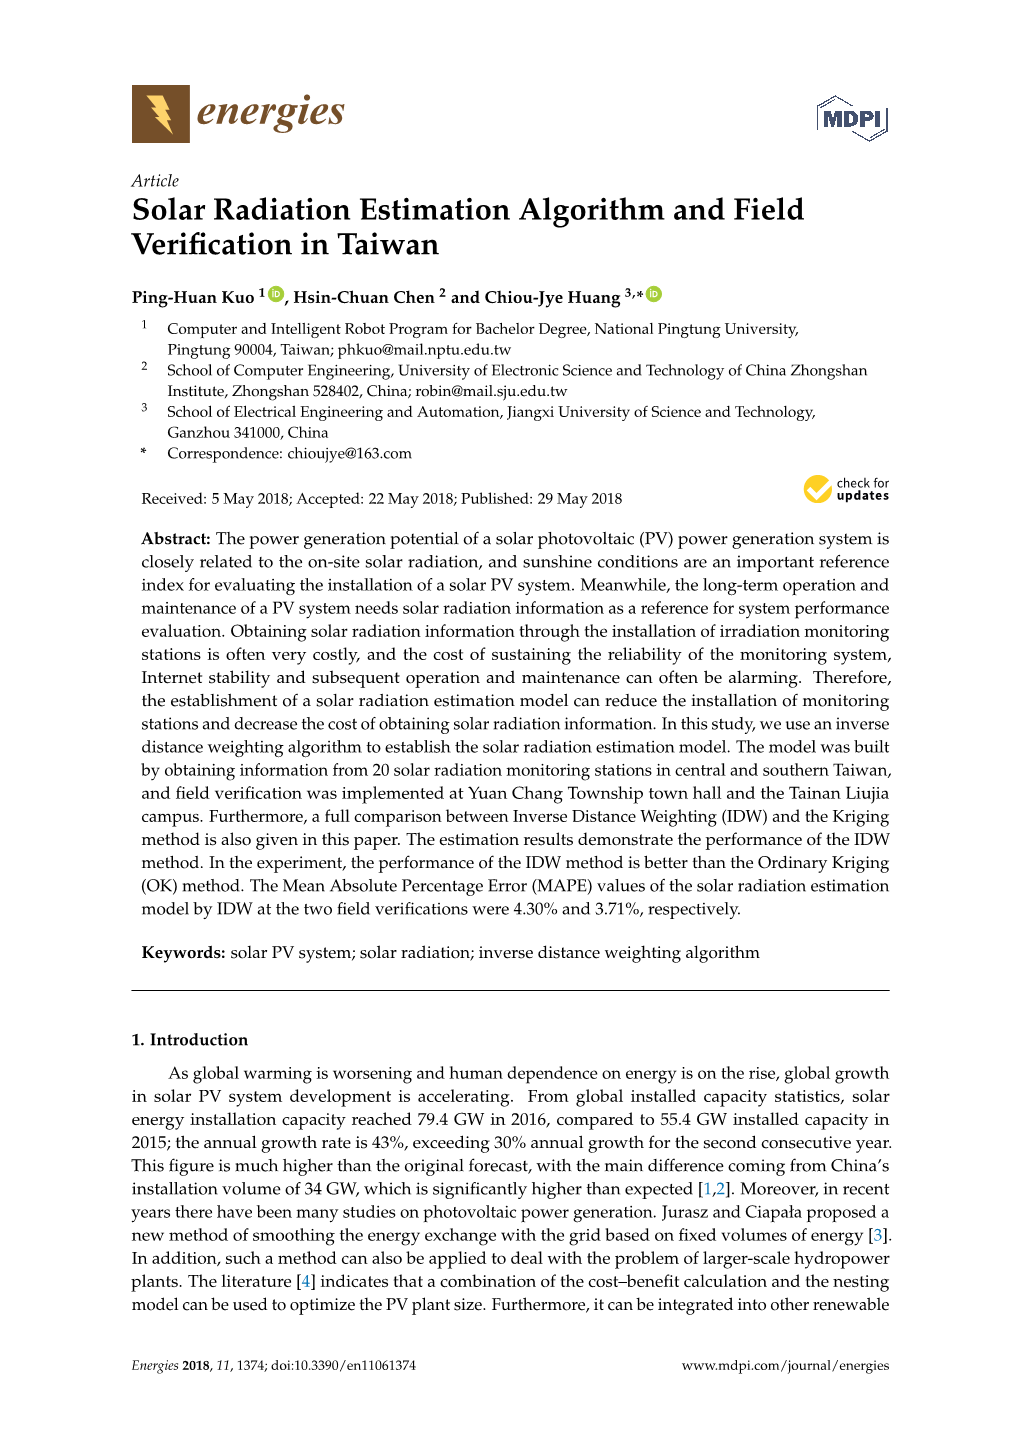 Solar Radiation Estimation Algorithm and Field Verification in Taiwan